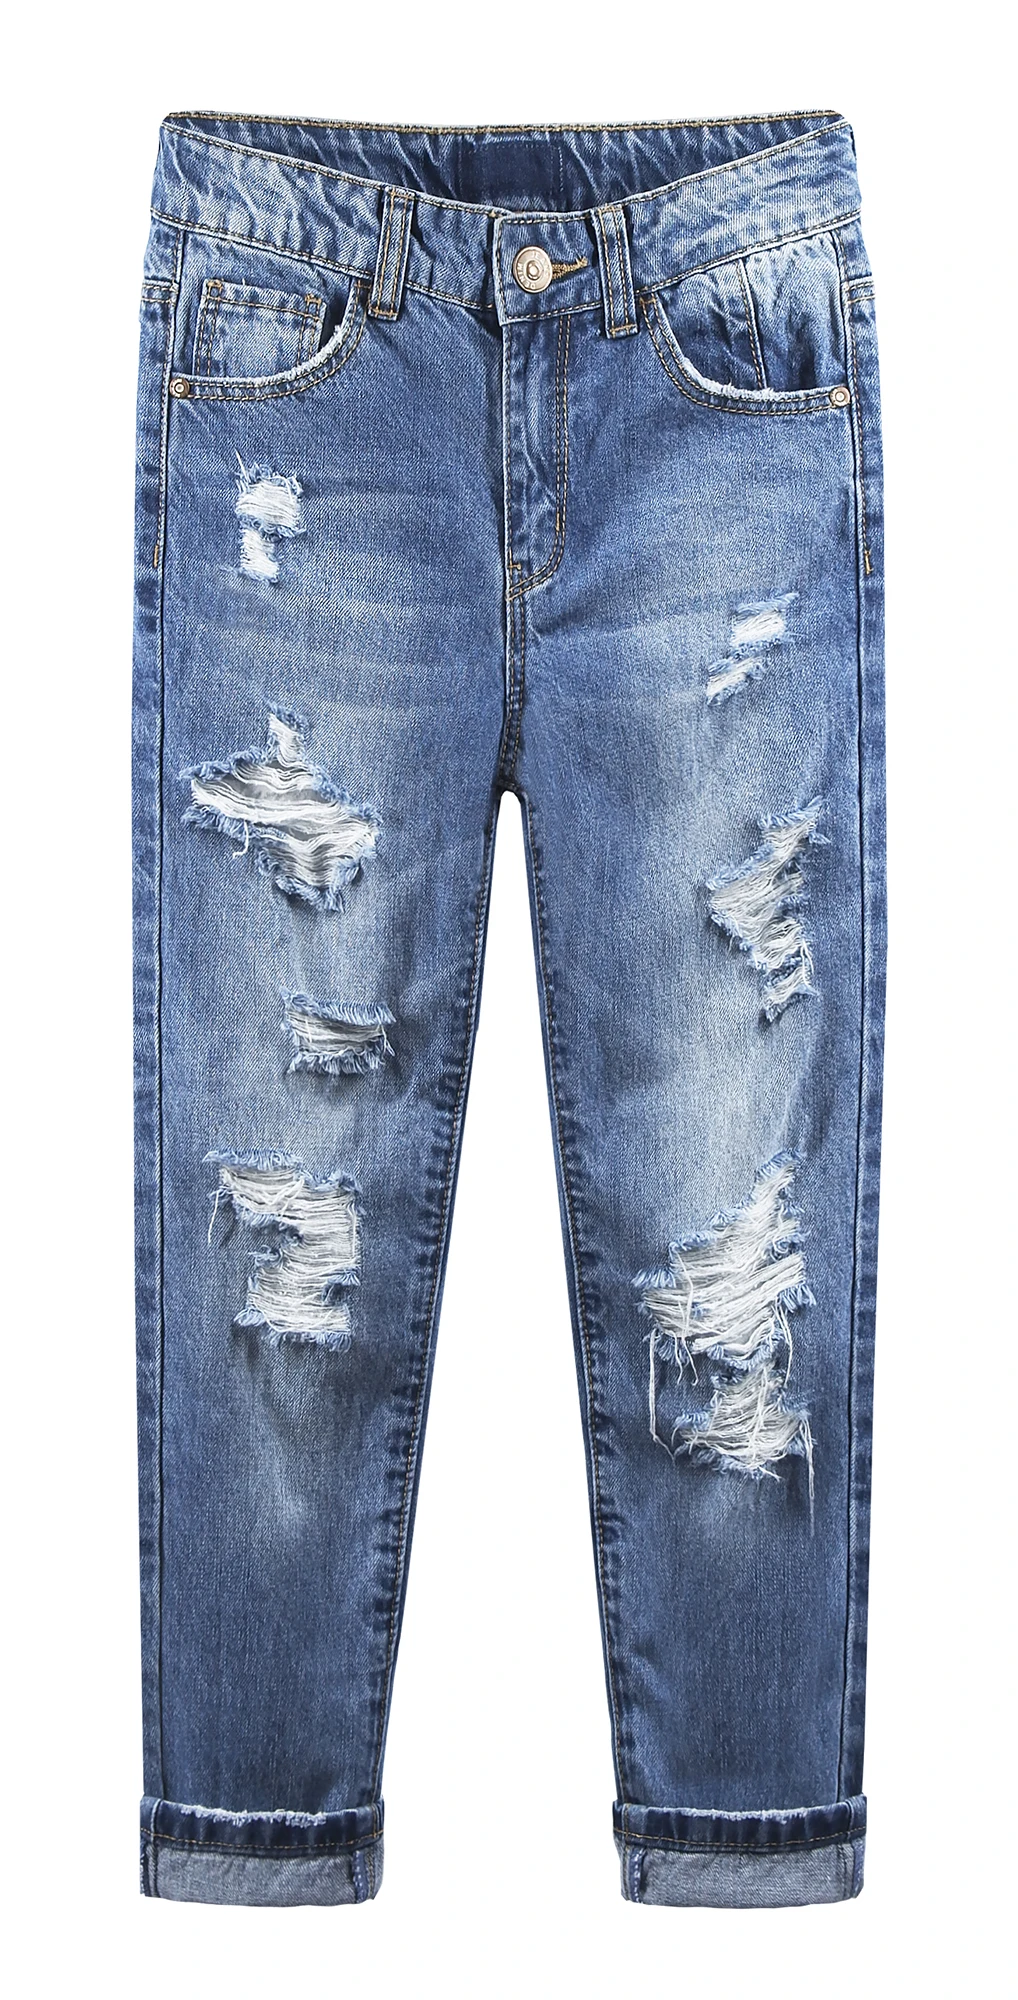 

KIDSCOOL SPACE Children Girls/Boys Denim Pants Frayed Edge Elastic Band Inside Washed Ripped Holes Slim Jeans